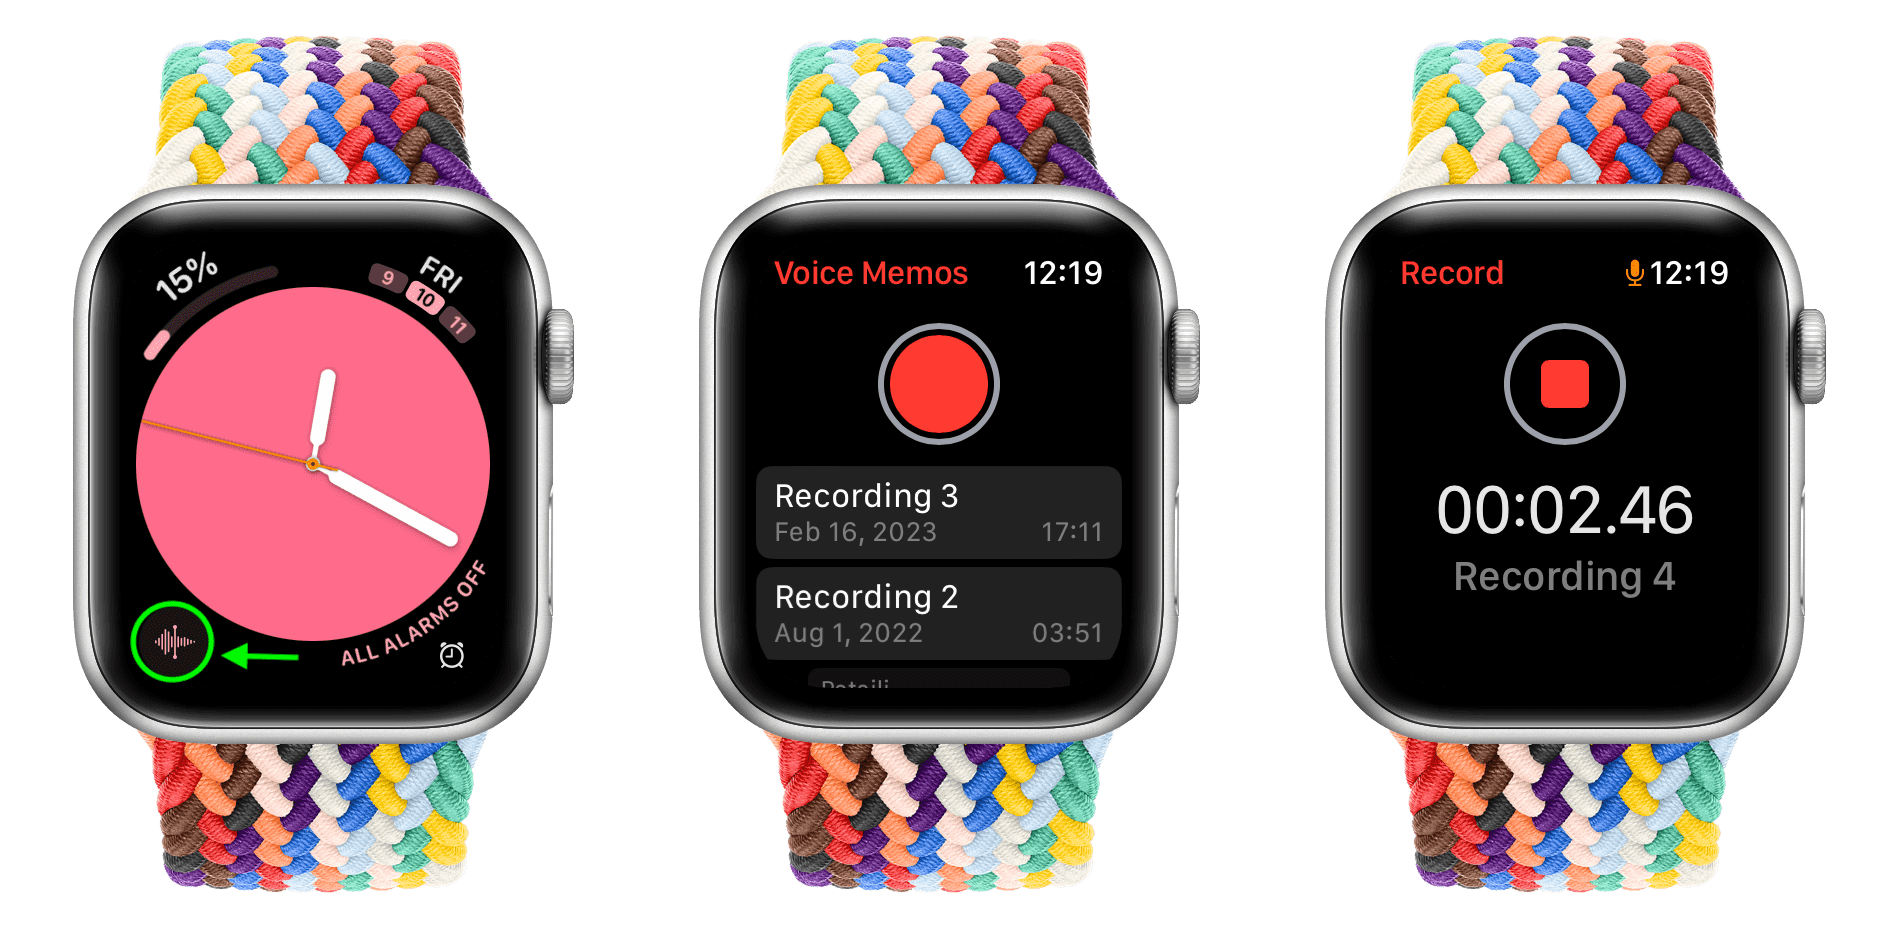 Voice Memos app on Apple Watch